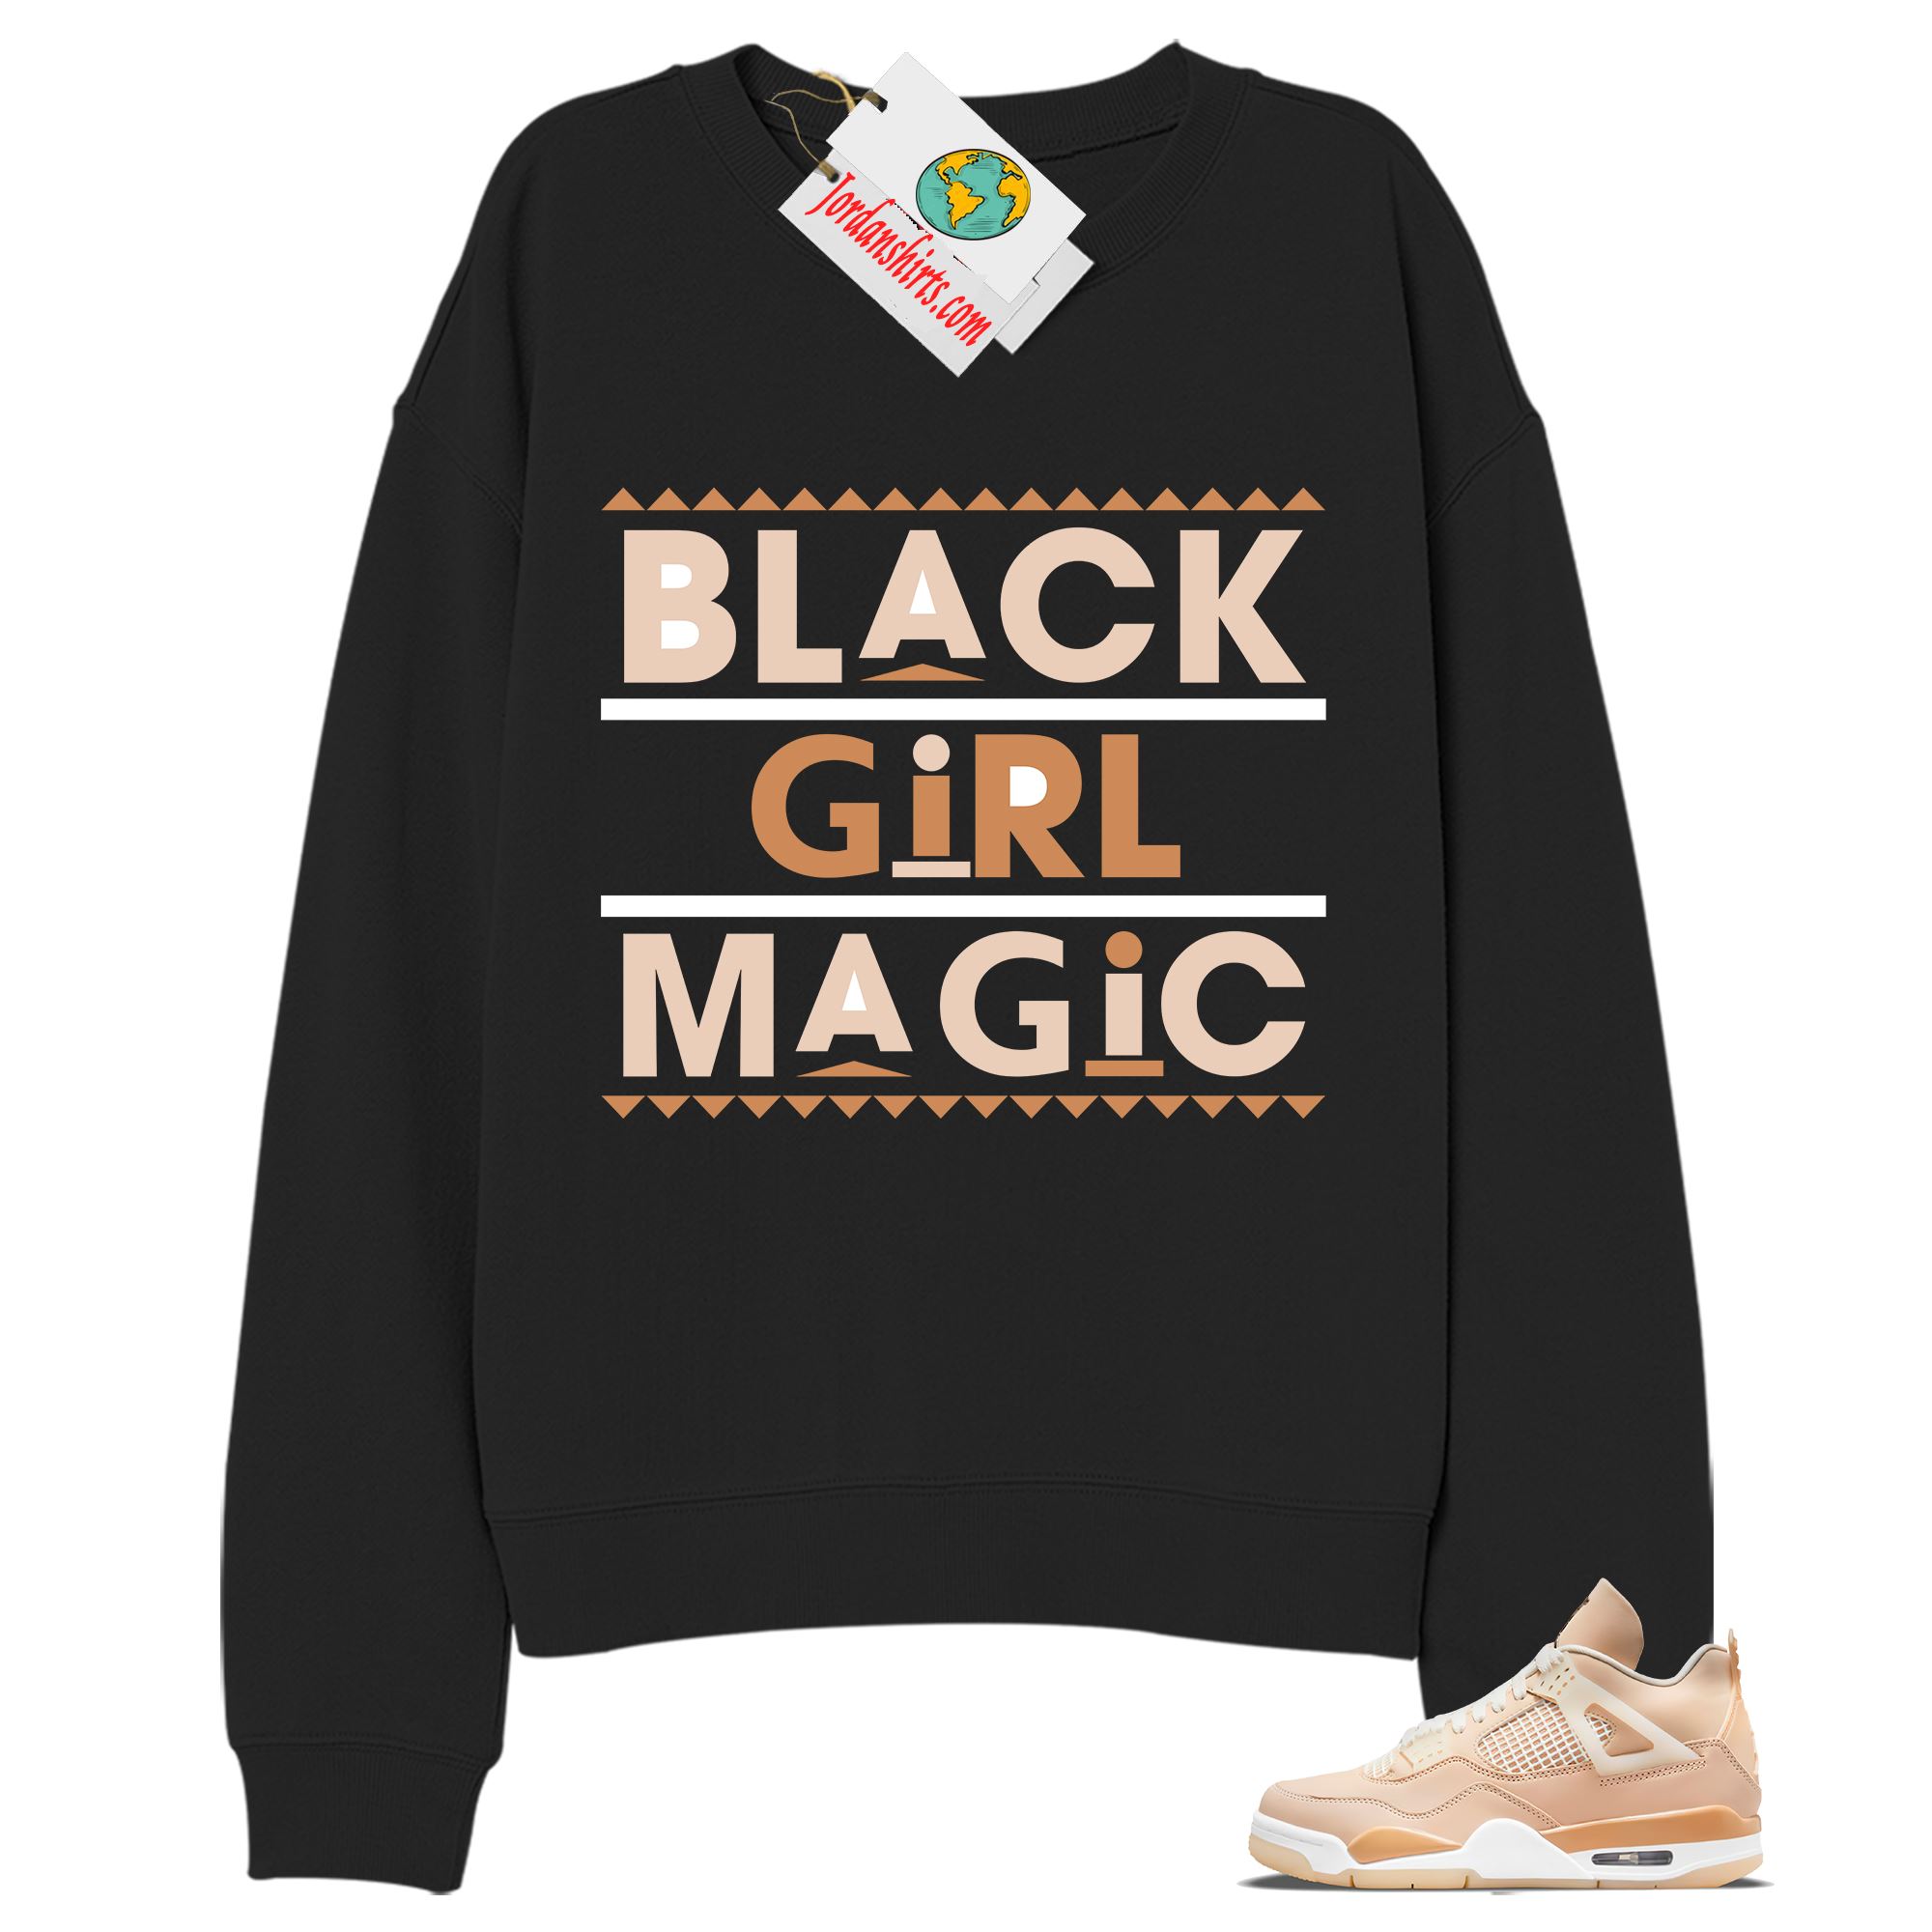 Jordan 4 Sweatshirt, Black Girl Magic Black Sweatshirt Air Jordan 4 Shimmer 4s Plus Size Up To 5xl